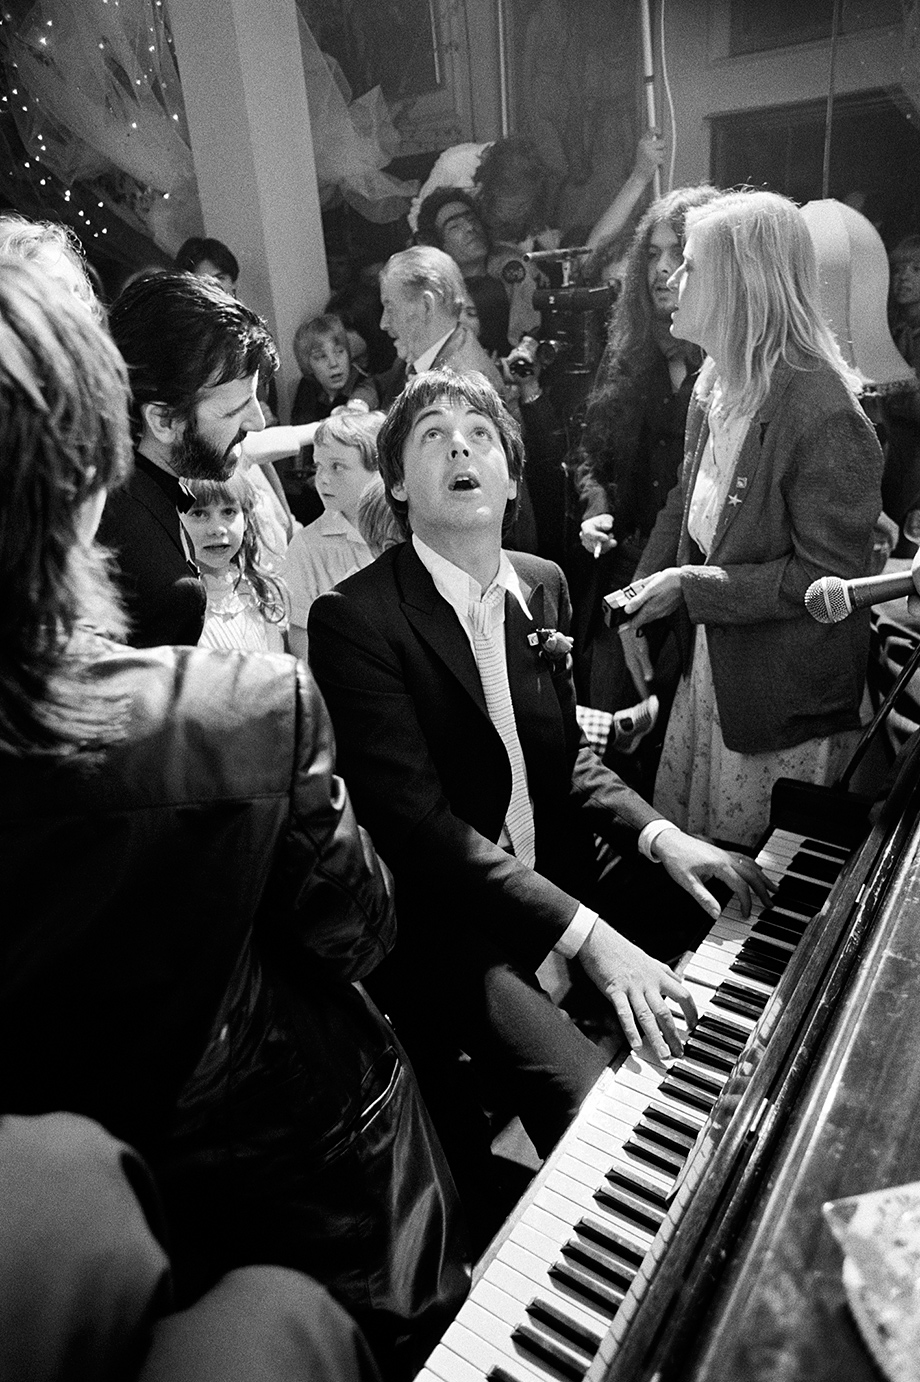 Paul McCartney at Ringo Starr’s wedding, 1981.